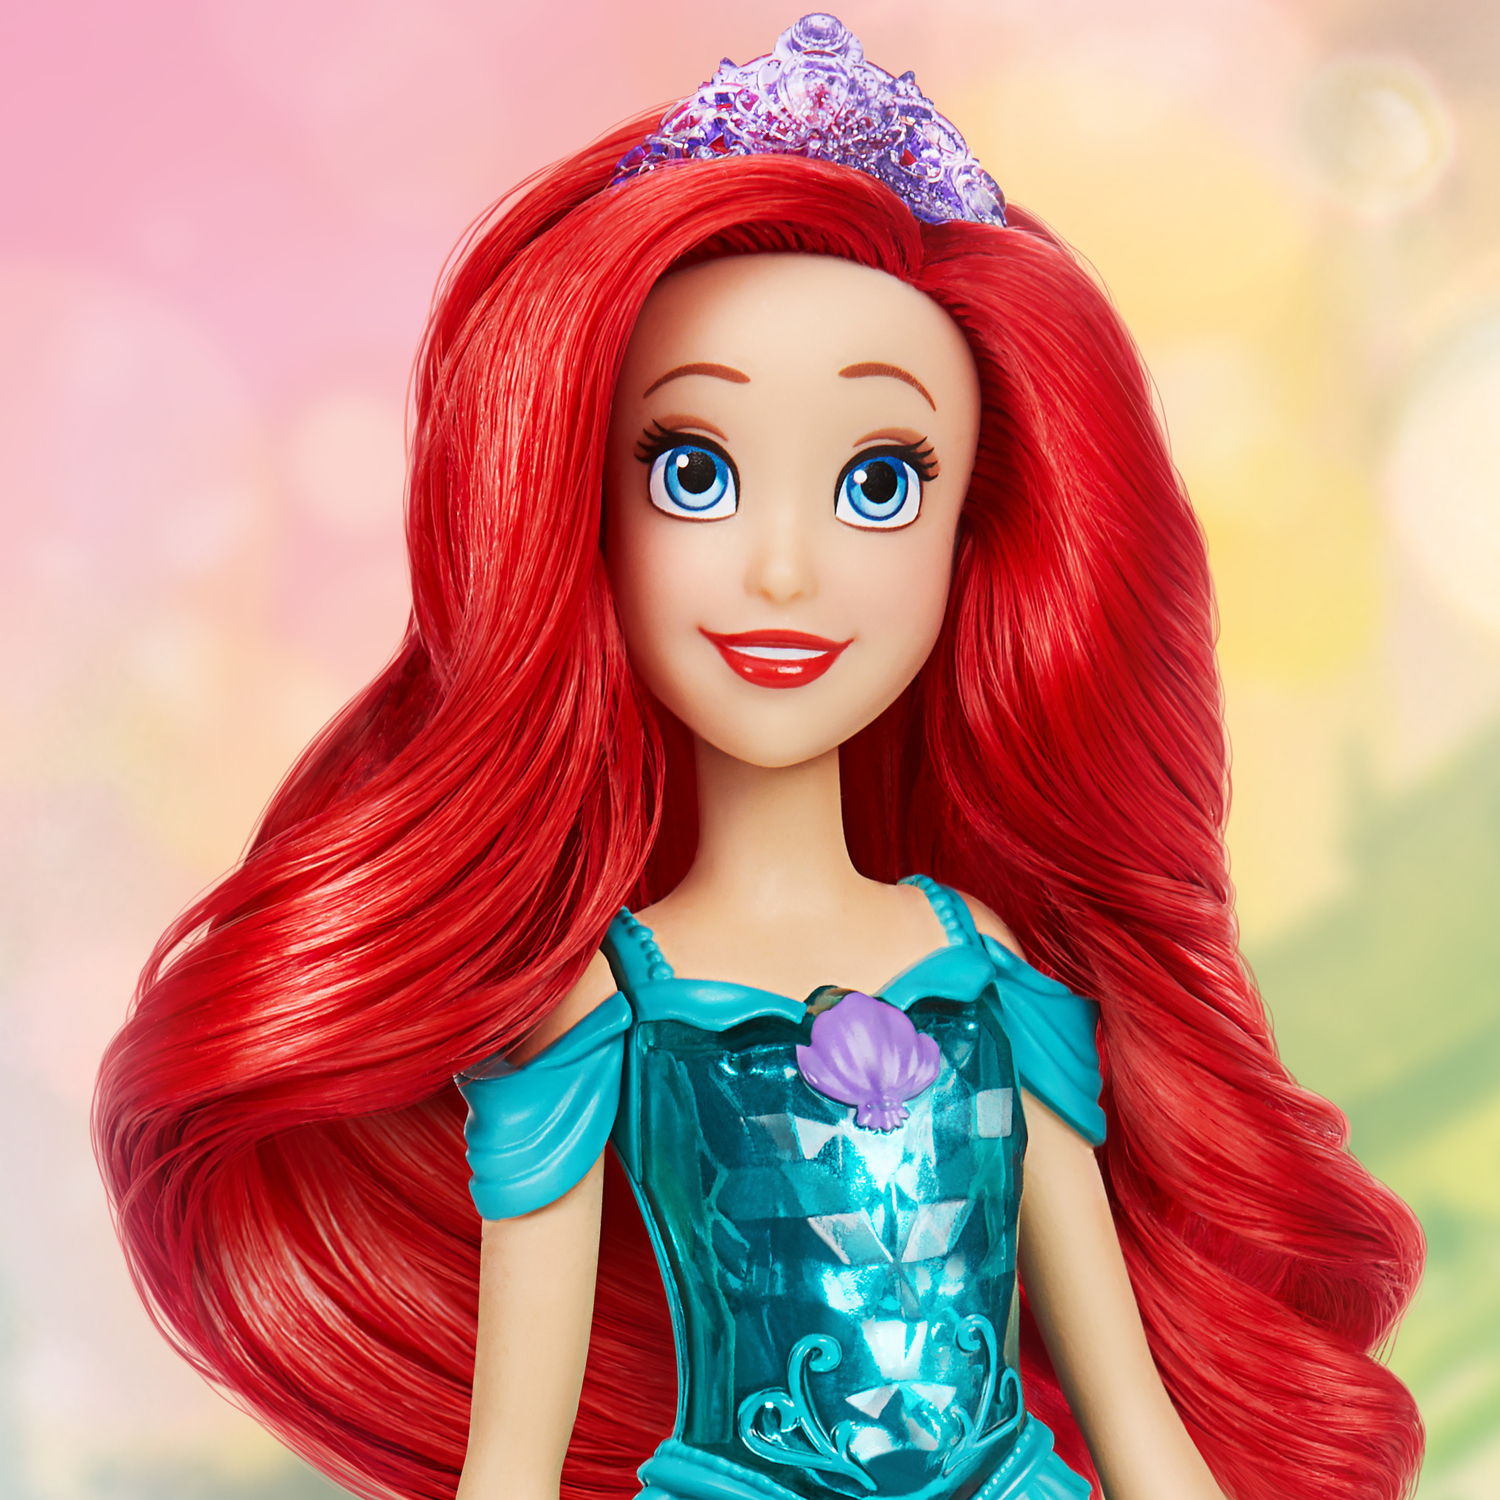 Disney Princess doll - F08955X6 - Imagine That Toys